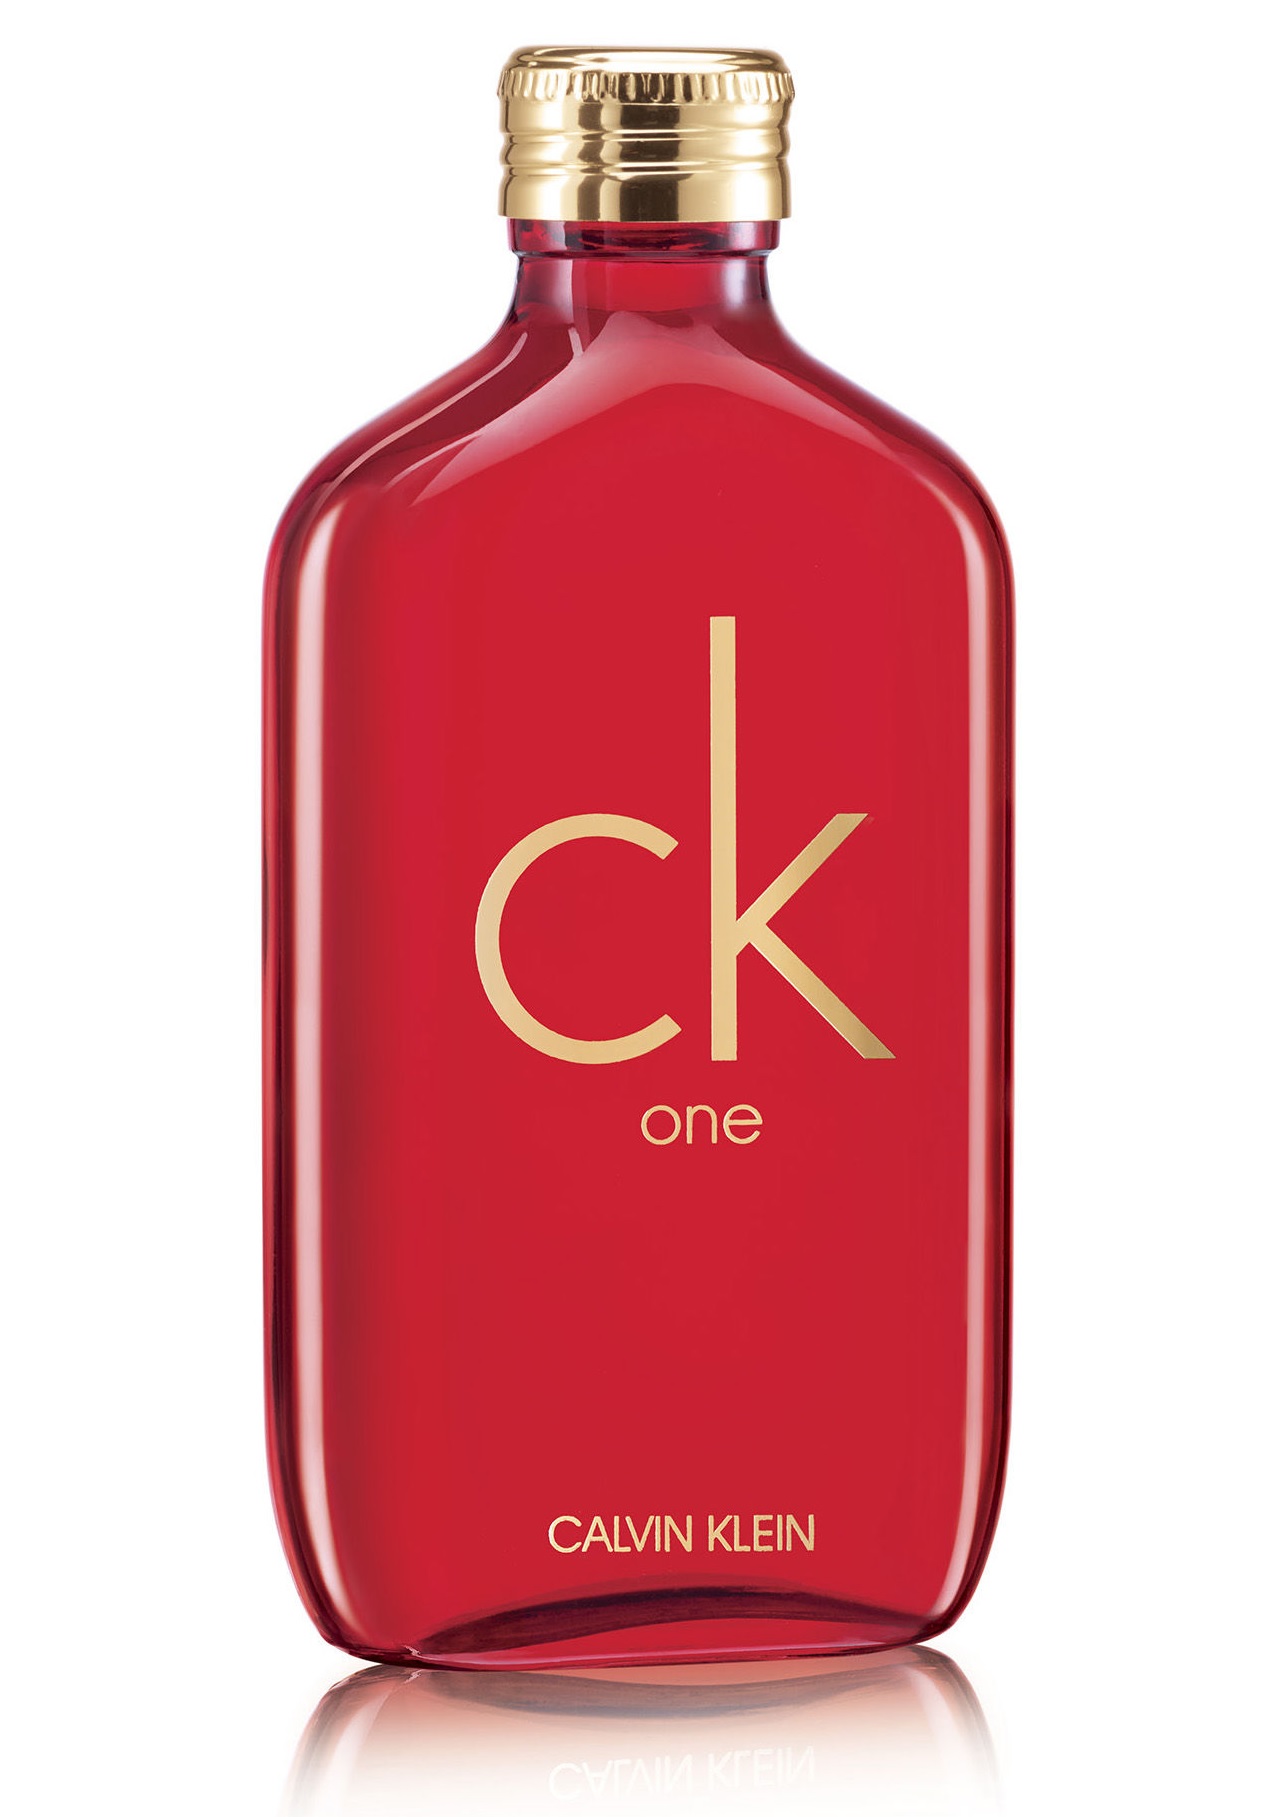 CK One Collector's Edition EDT 100 ml  น้ำหอม CK One น้ำหอมที่ผู้หญิงก็ใช้ได้ผู้ชายก็ใช้ดี มาในแพ็คเก็จลิมิเต็ดสีแดง ต้อนรับตรุษจีน 